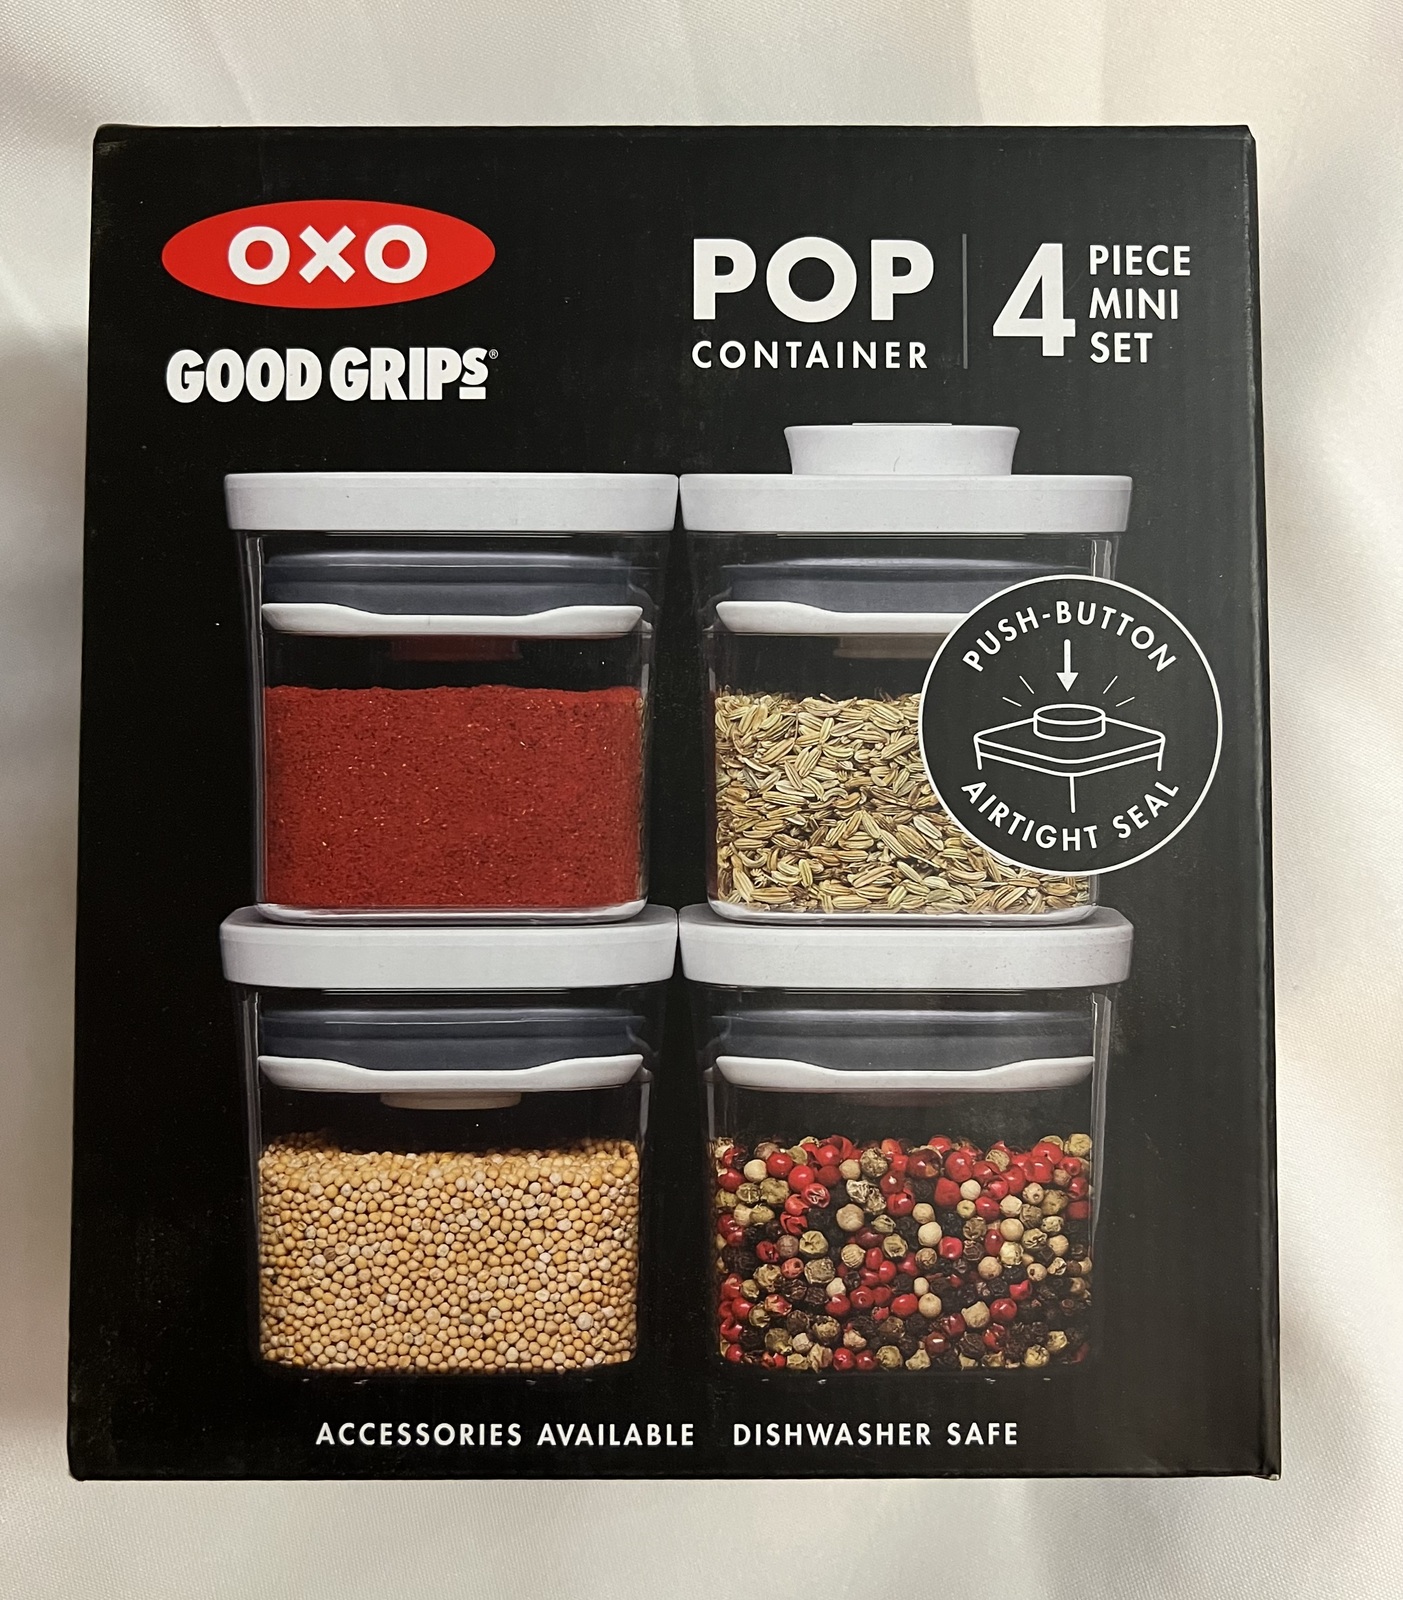 OXO Good Grips 4-Piece Mini POP Container set - $29.95